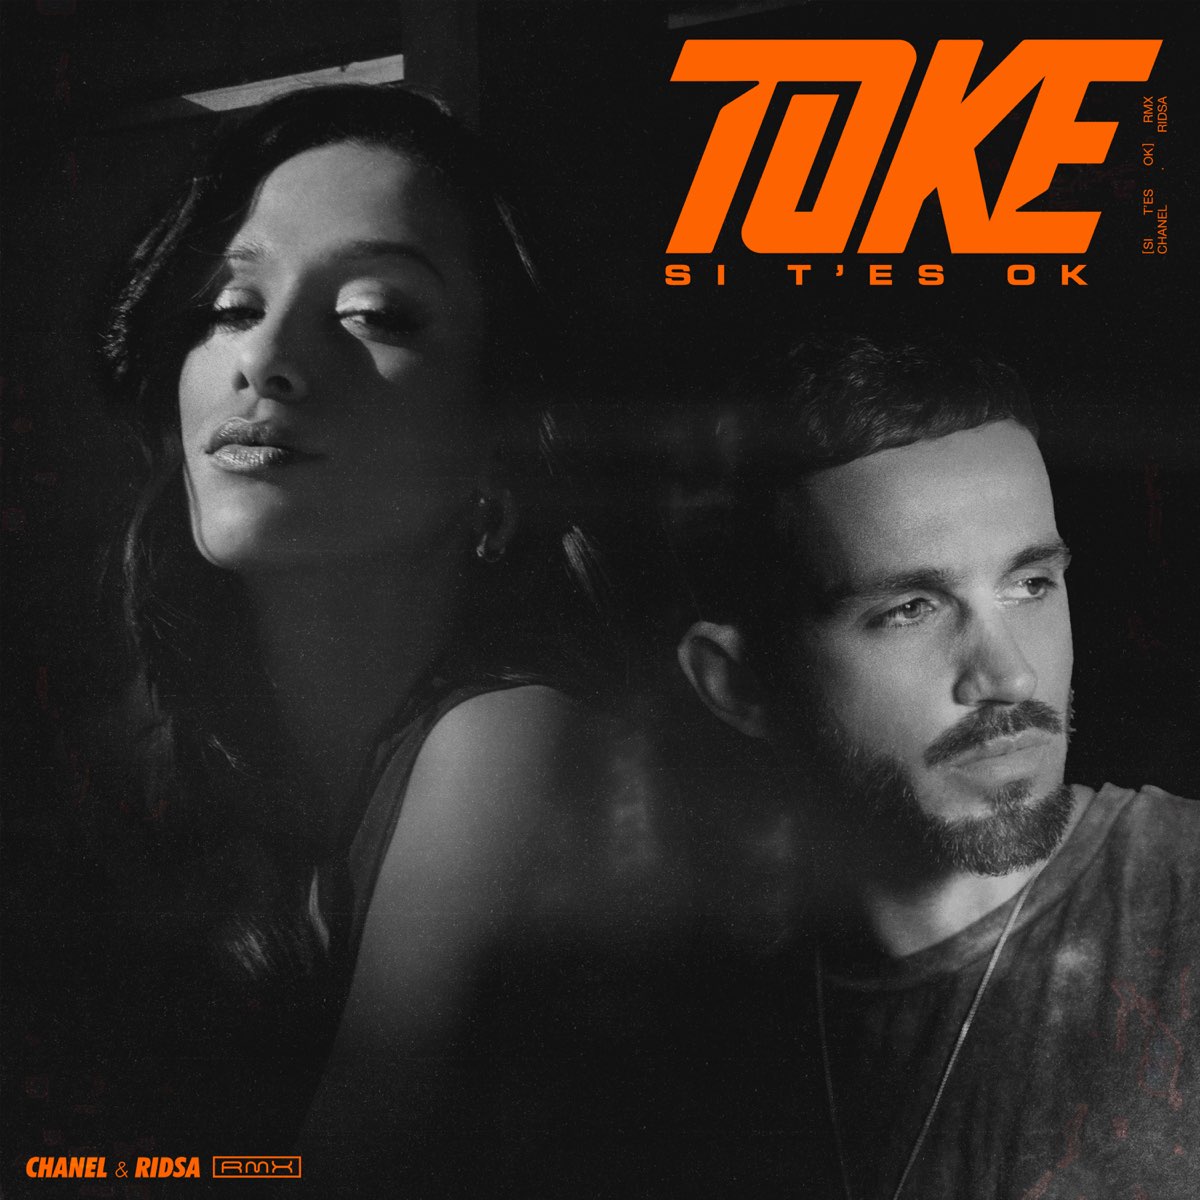 ‎TOKE (Si t'es ok) - Single - Album by Chanel & Ridsa - Apple Music